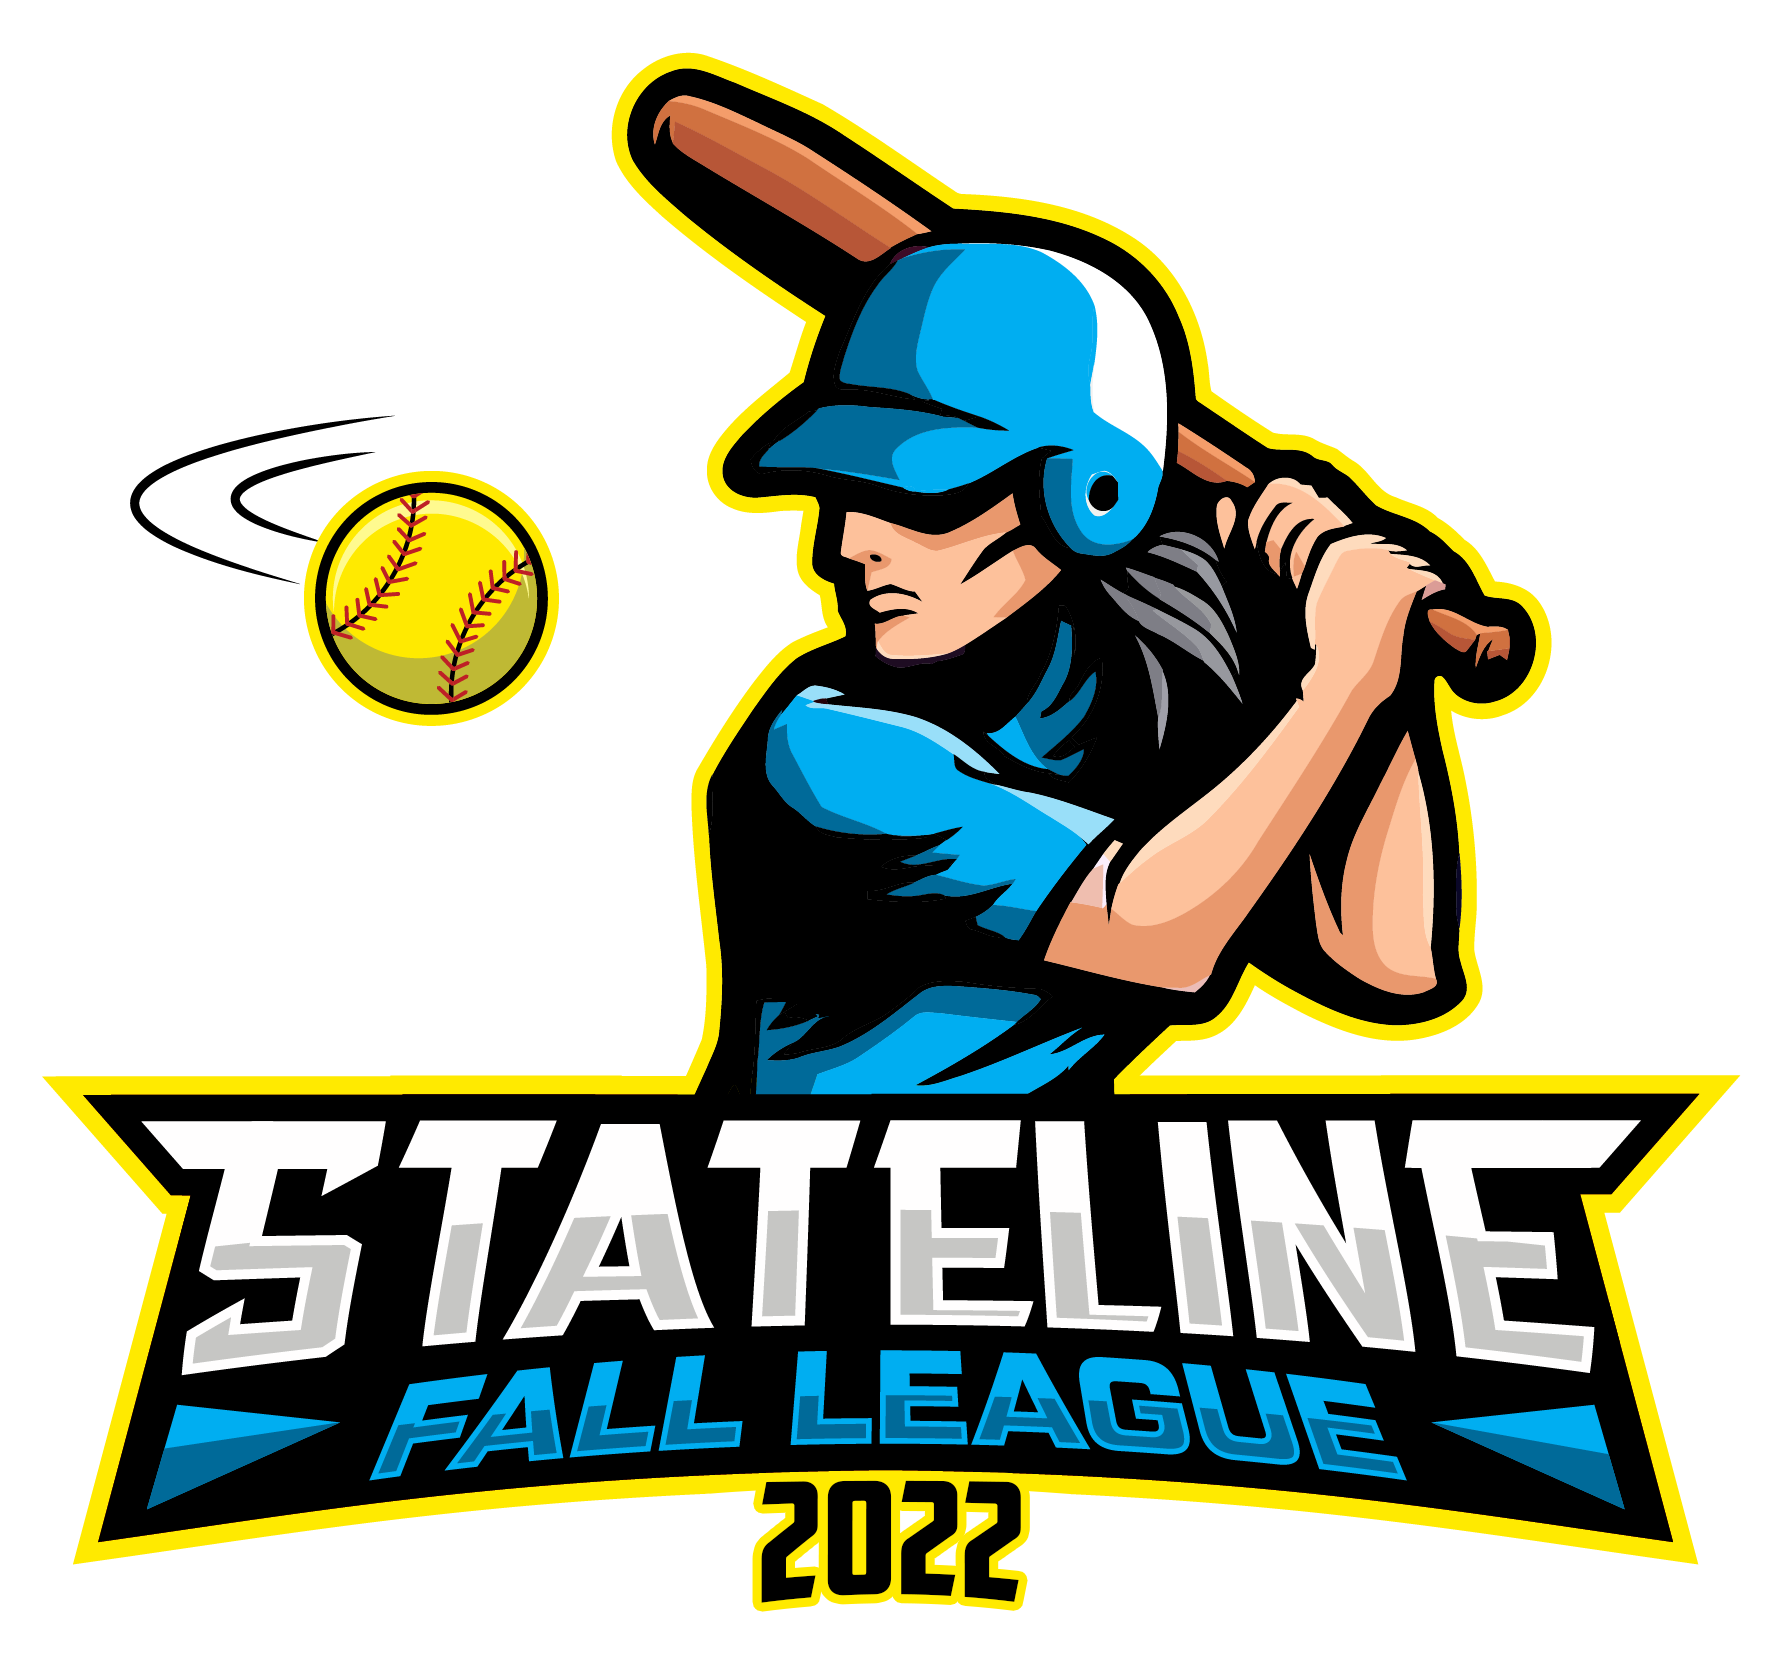 Stateline Fall League 2022